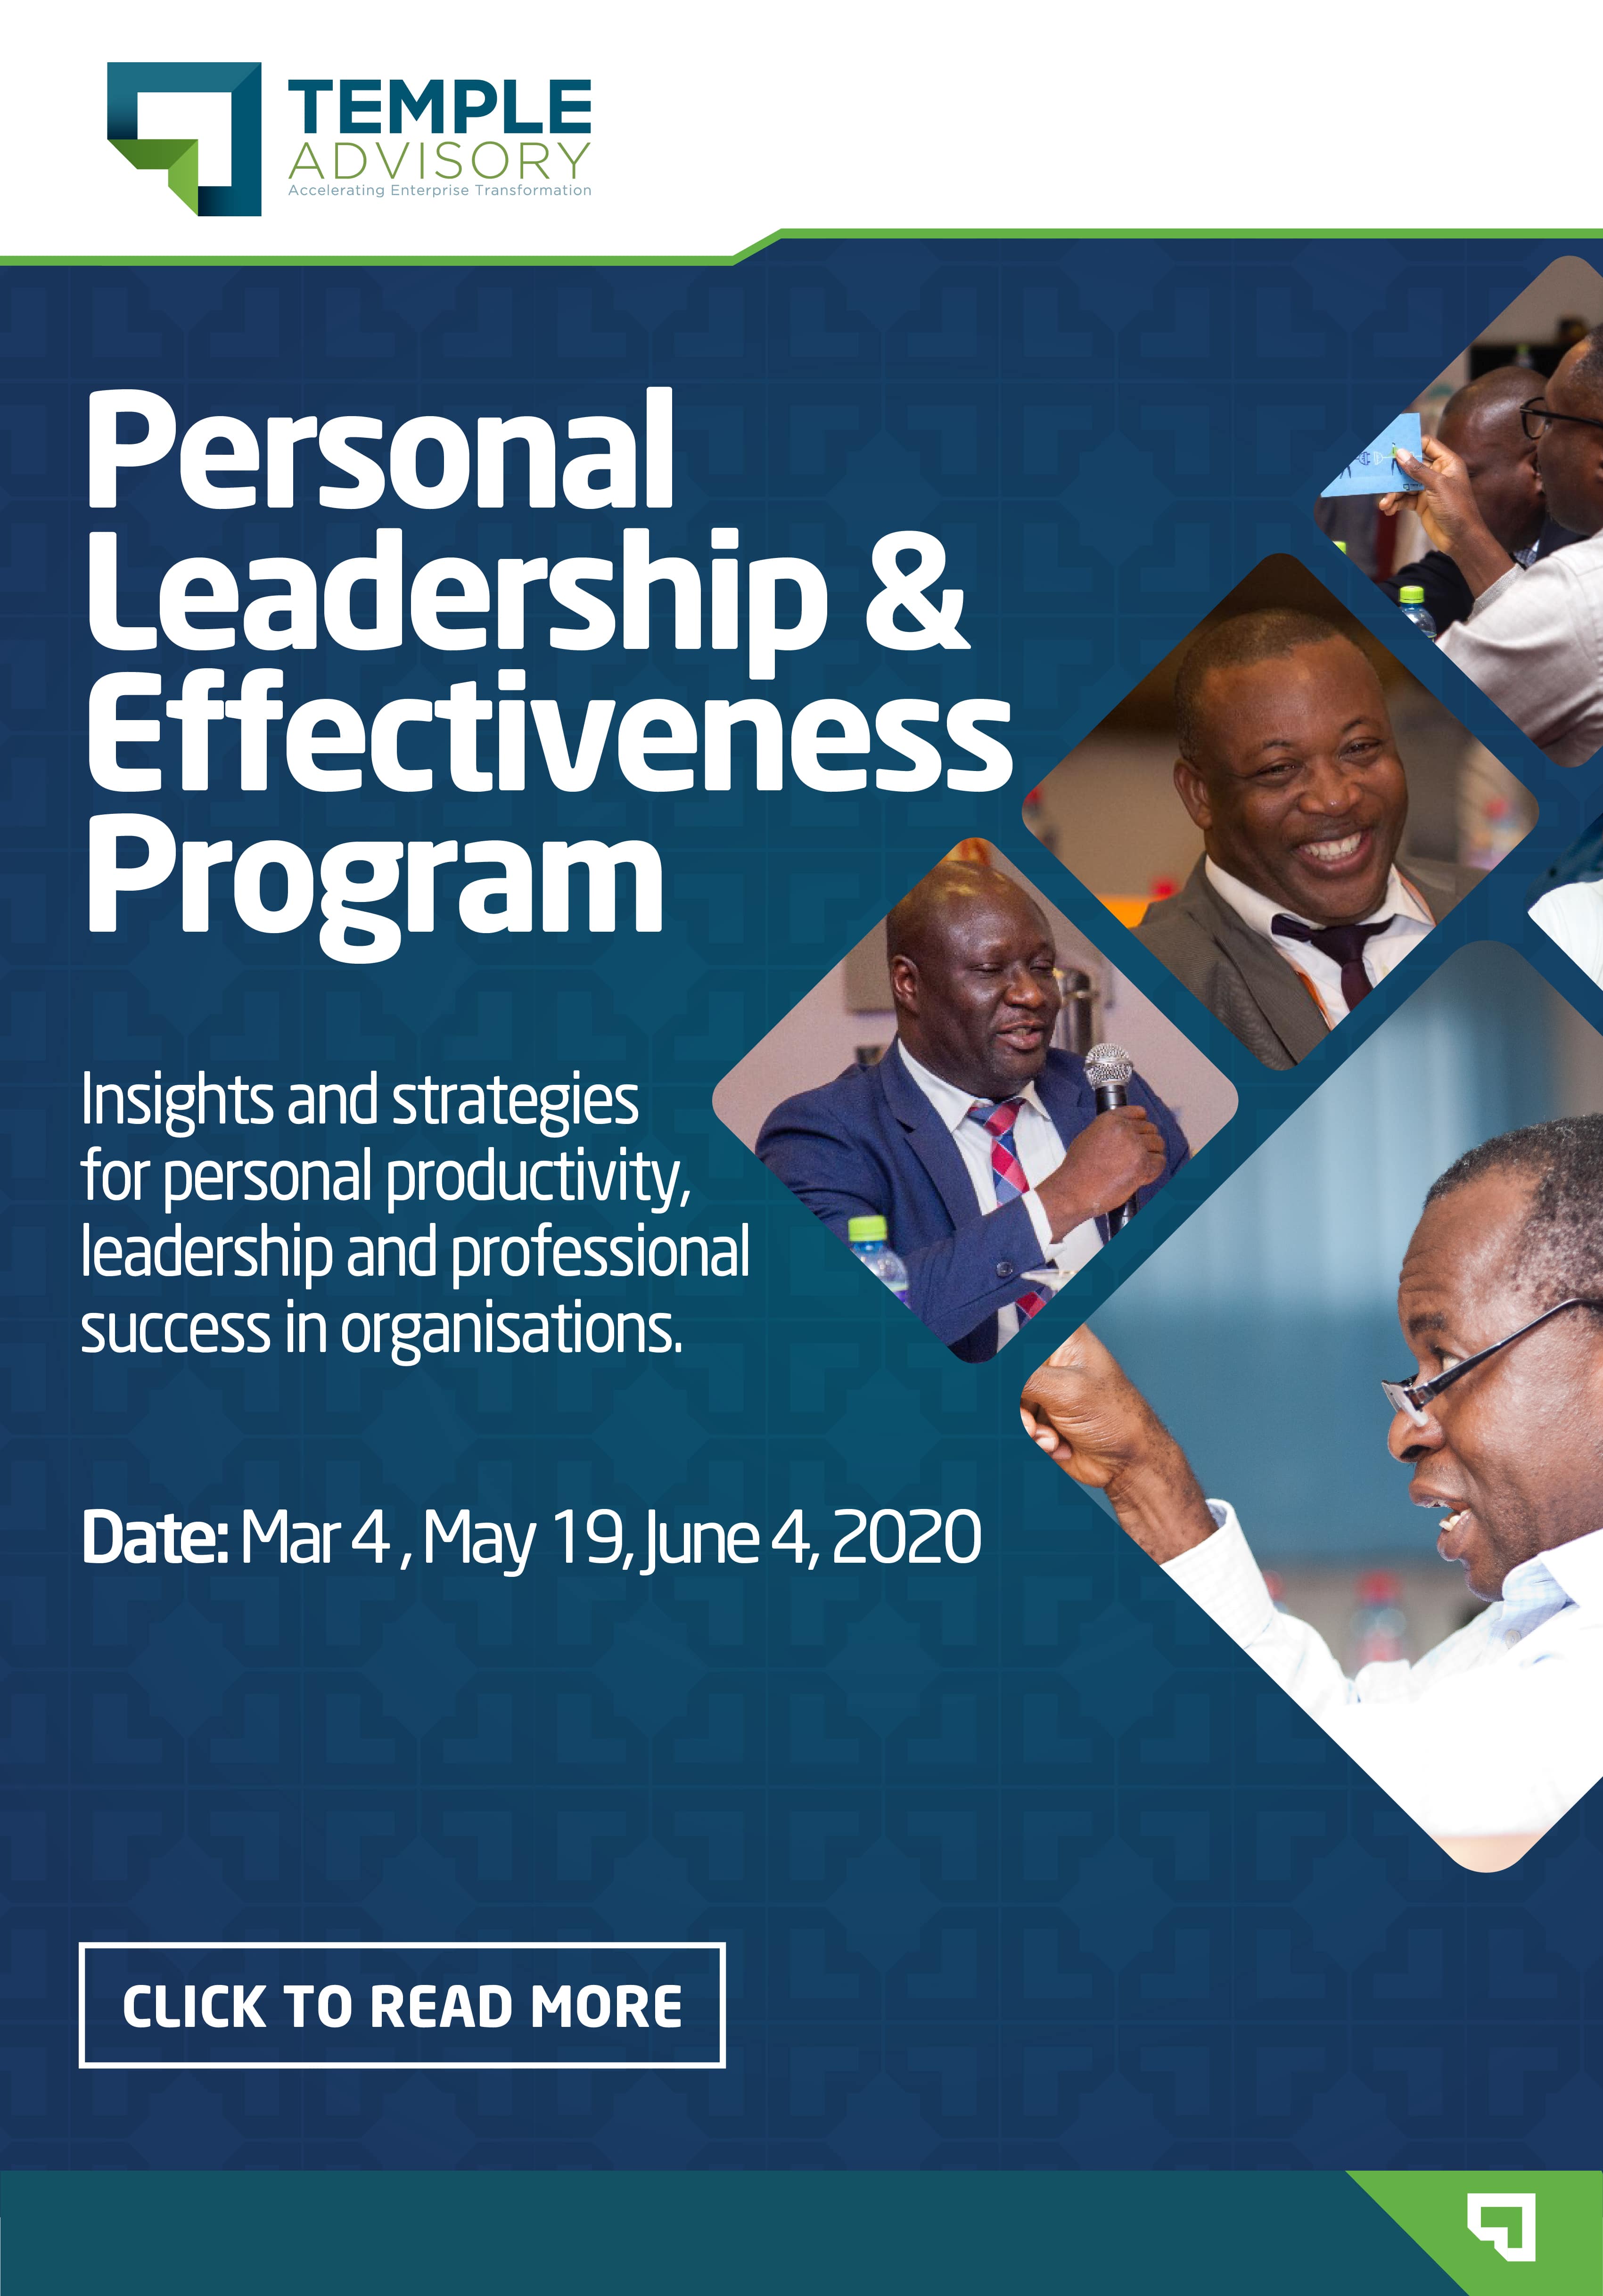 Personal Leadership & Effectiveness Program | TEMPLE Advisory